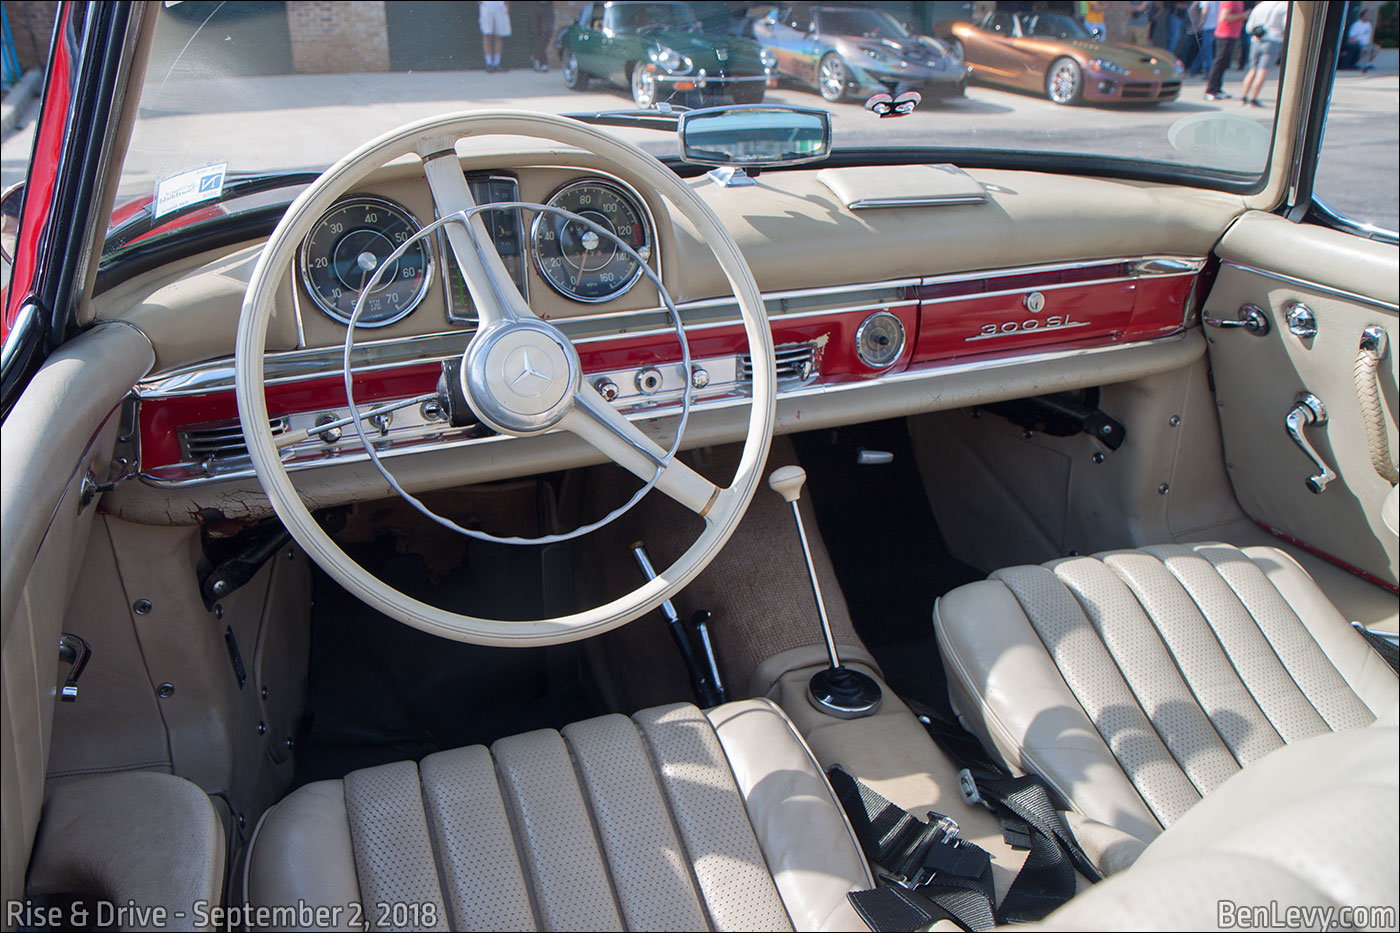 1961 Mercedez-Benz 300 SL interior